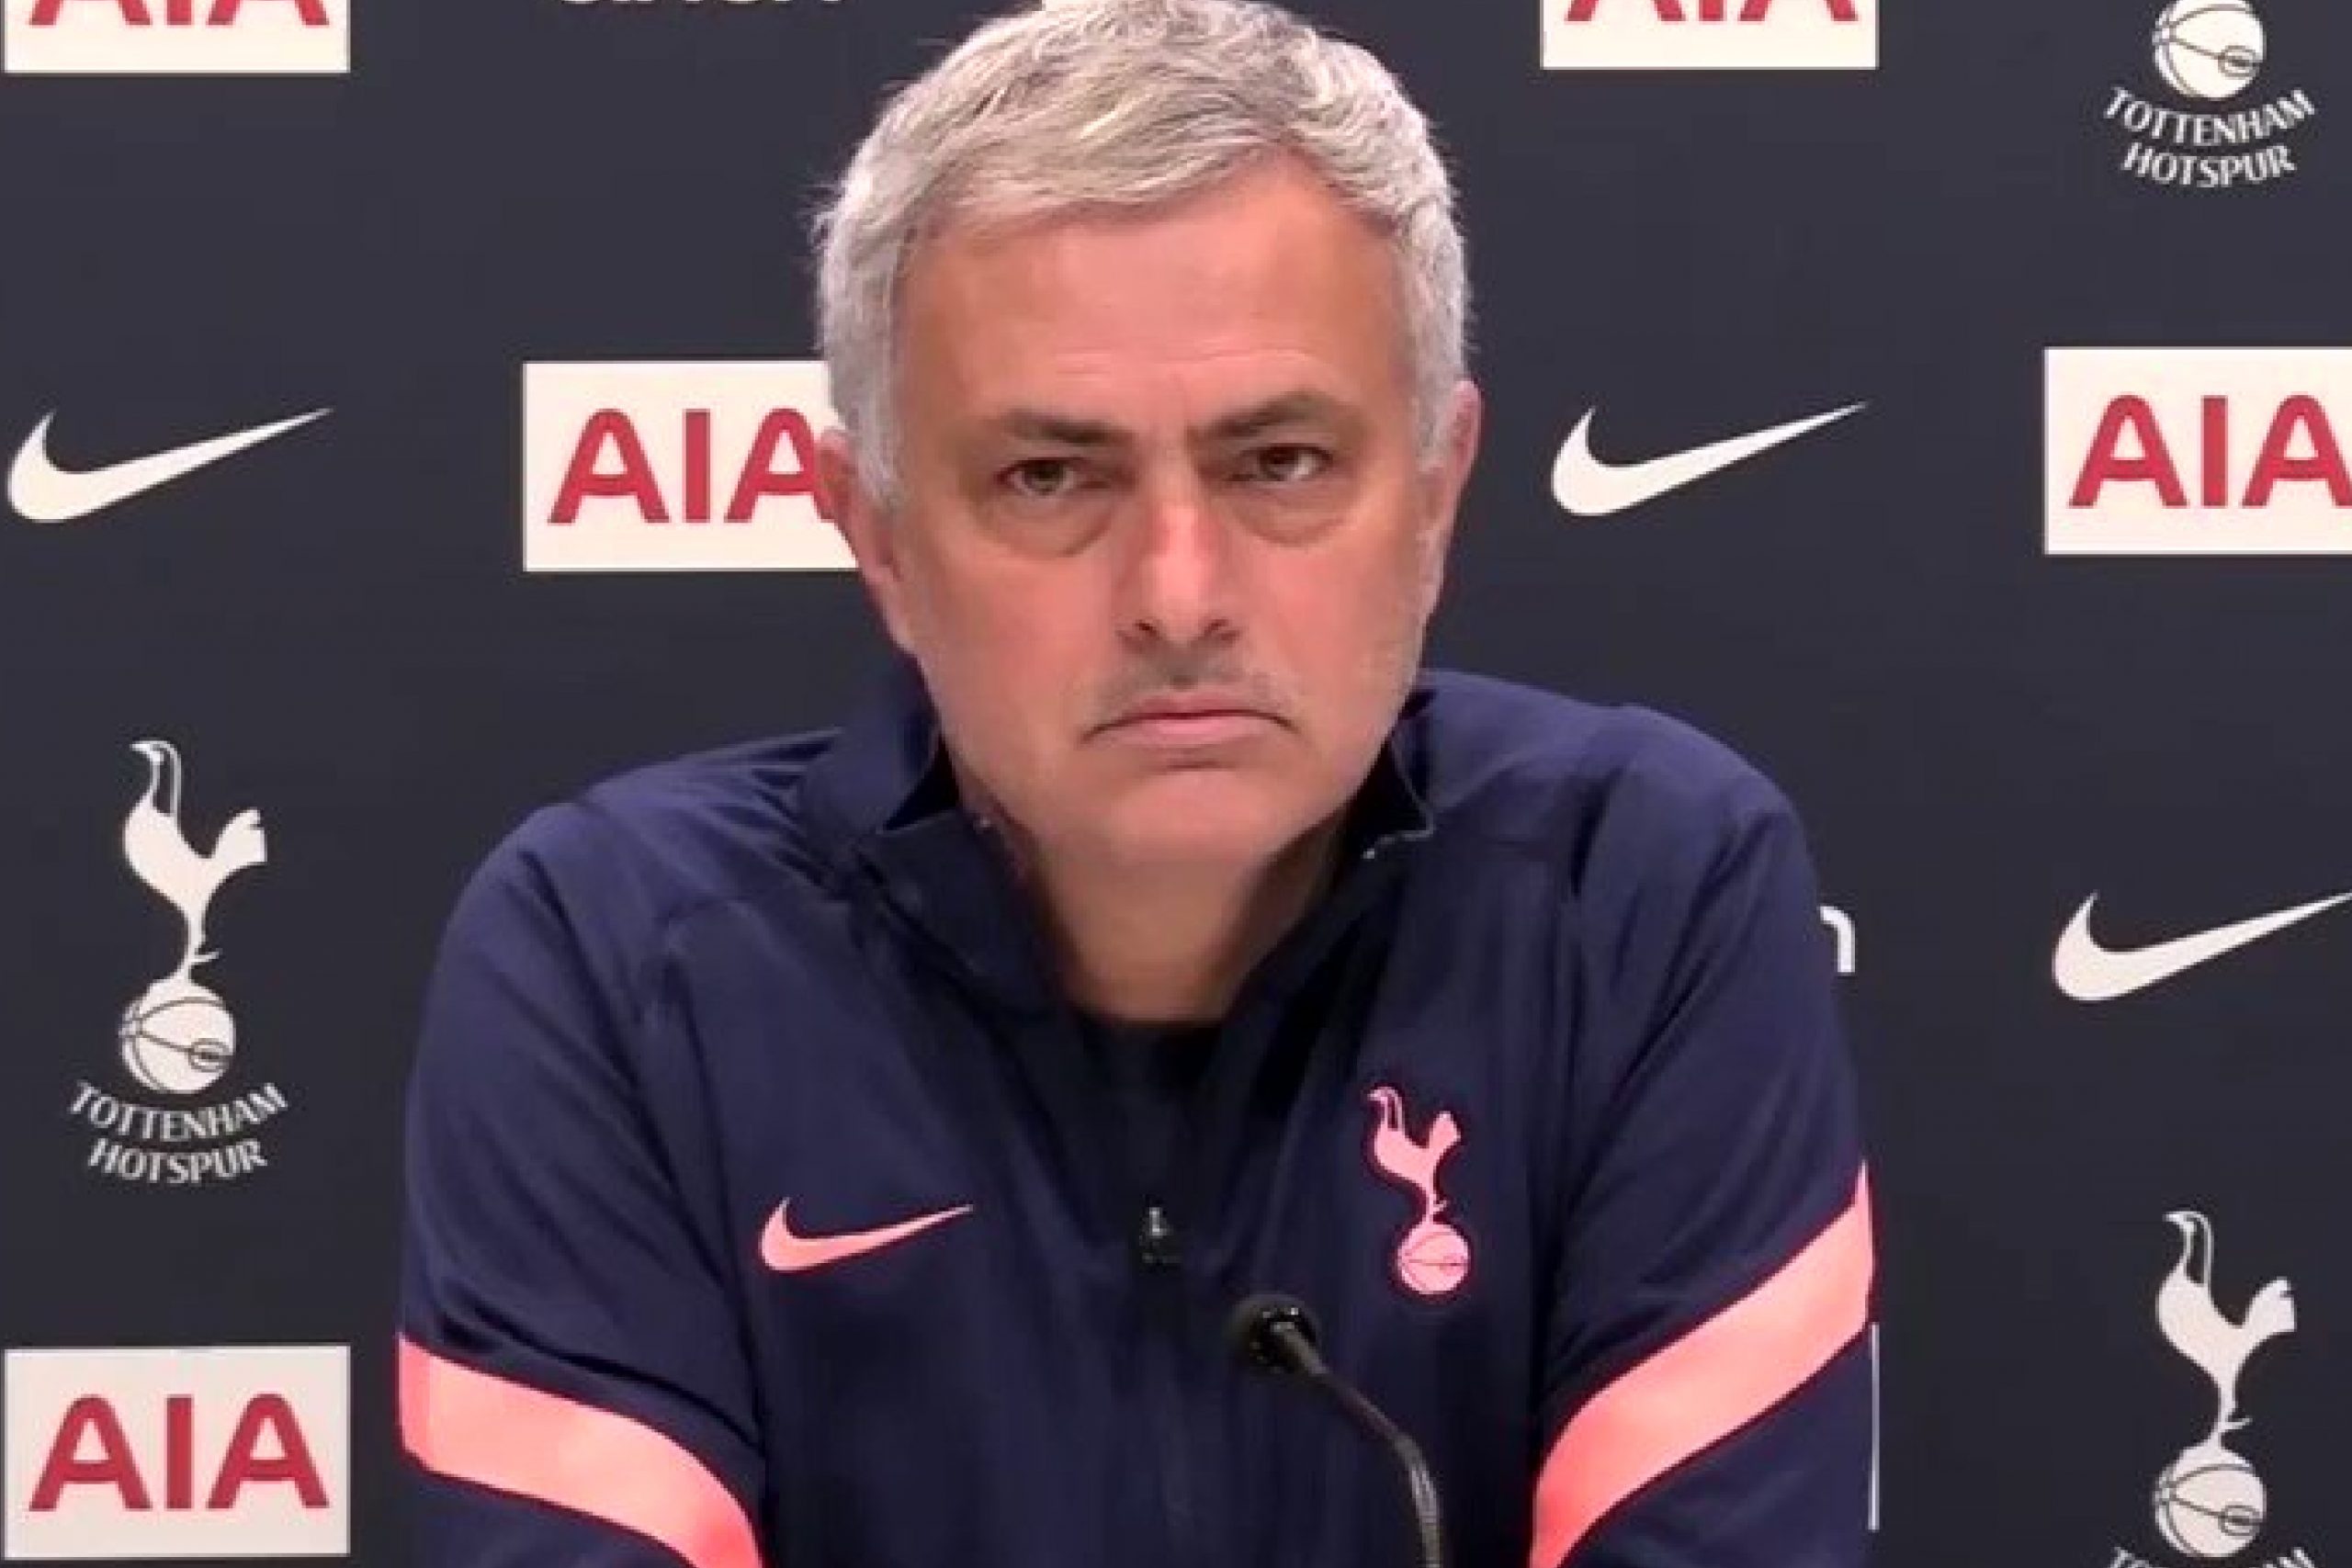 Jose Mourinho holding a press conference